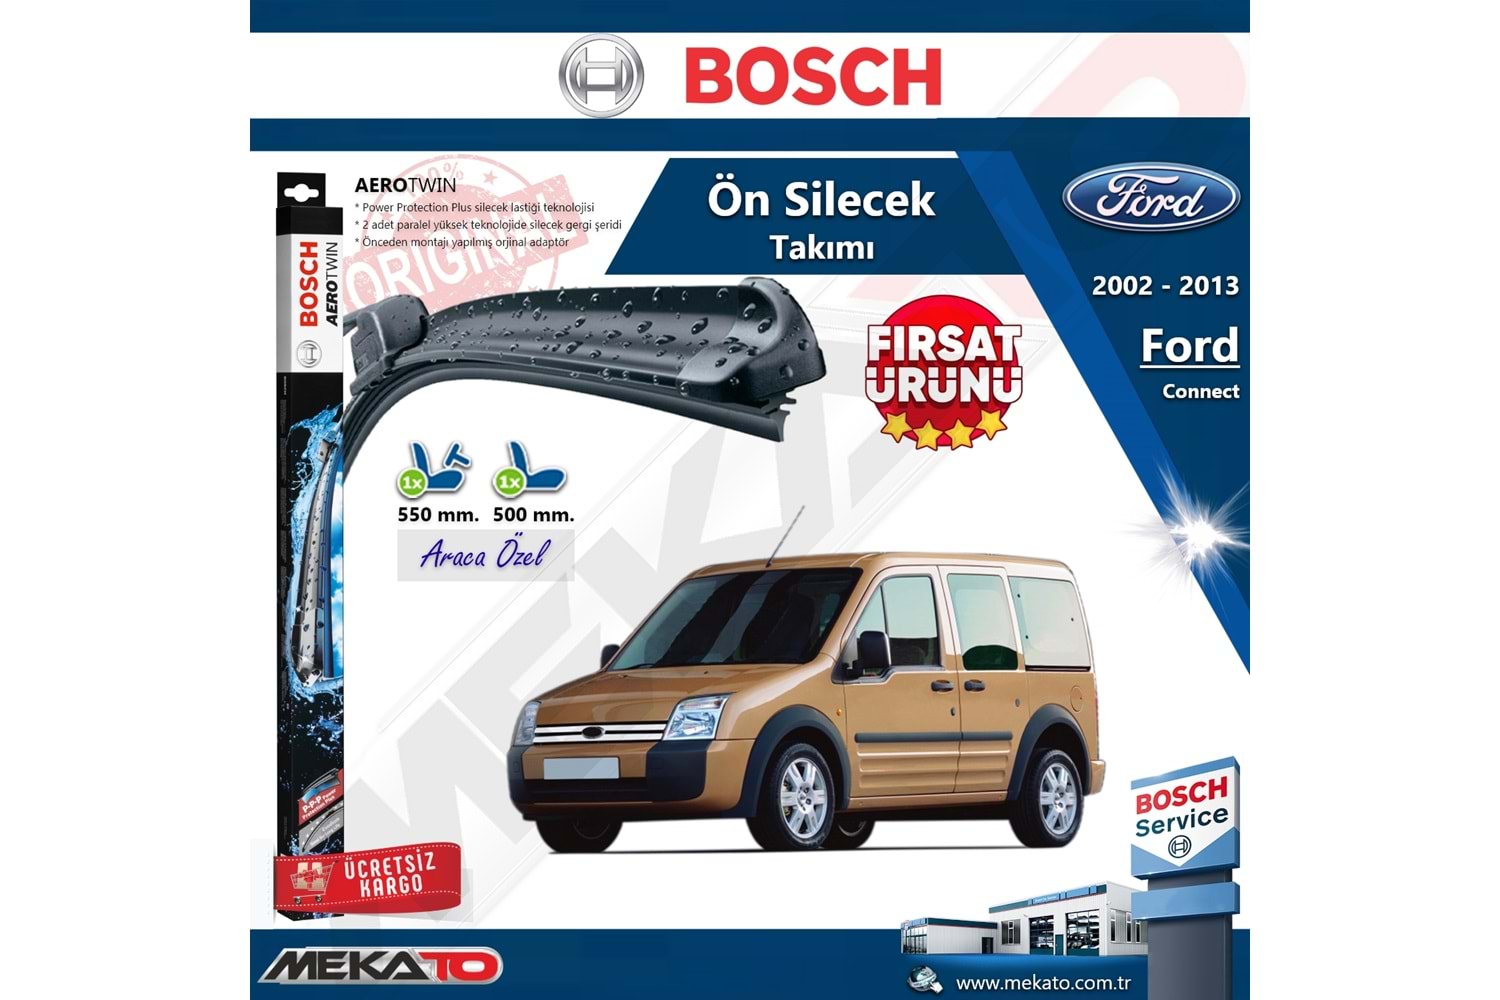 Ford Connect Ön Silecek Takımı Bosch Aero Twin 2002-2013